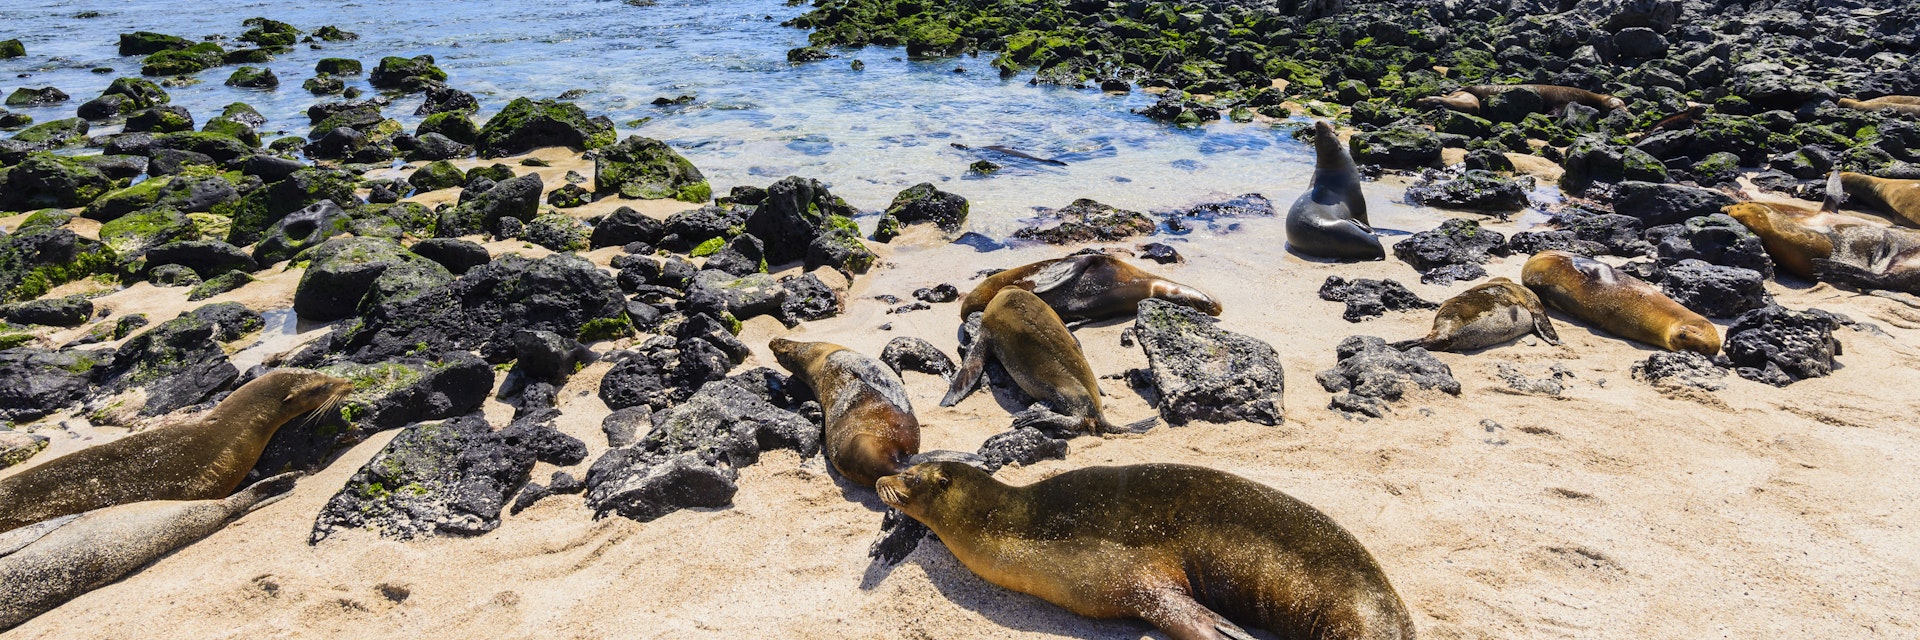 Fur seals at Punta Carola beach, Galapagos islands (Ecuador)